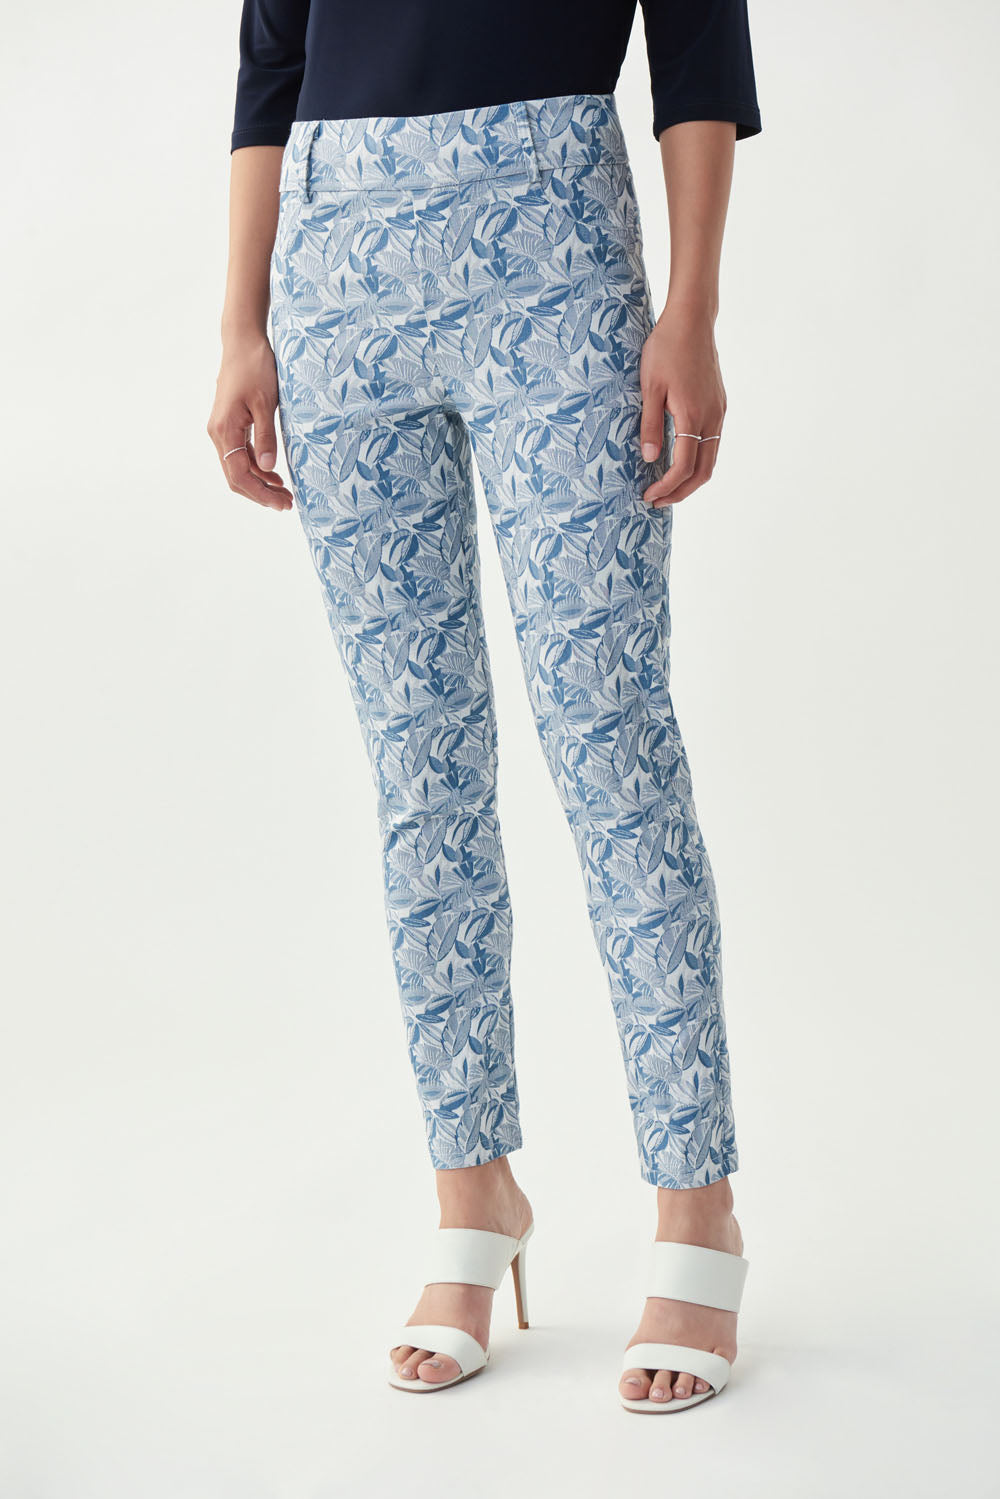 Joseph Ribkoff Blue/Vanilla Pants Style 221179 - 2